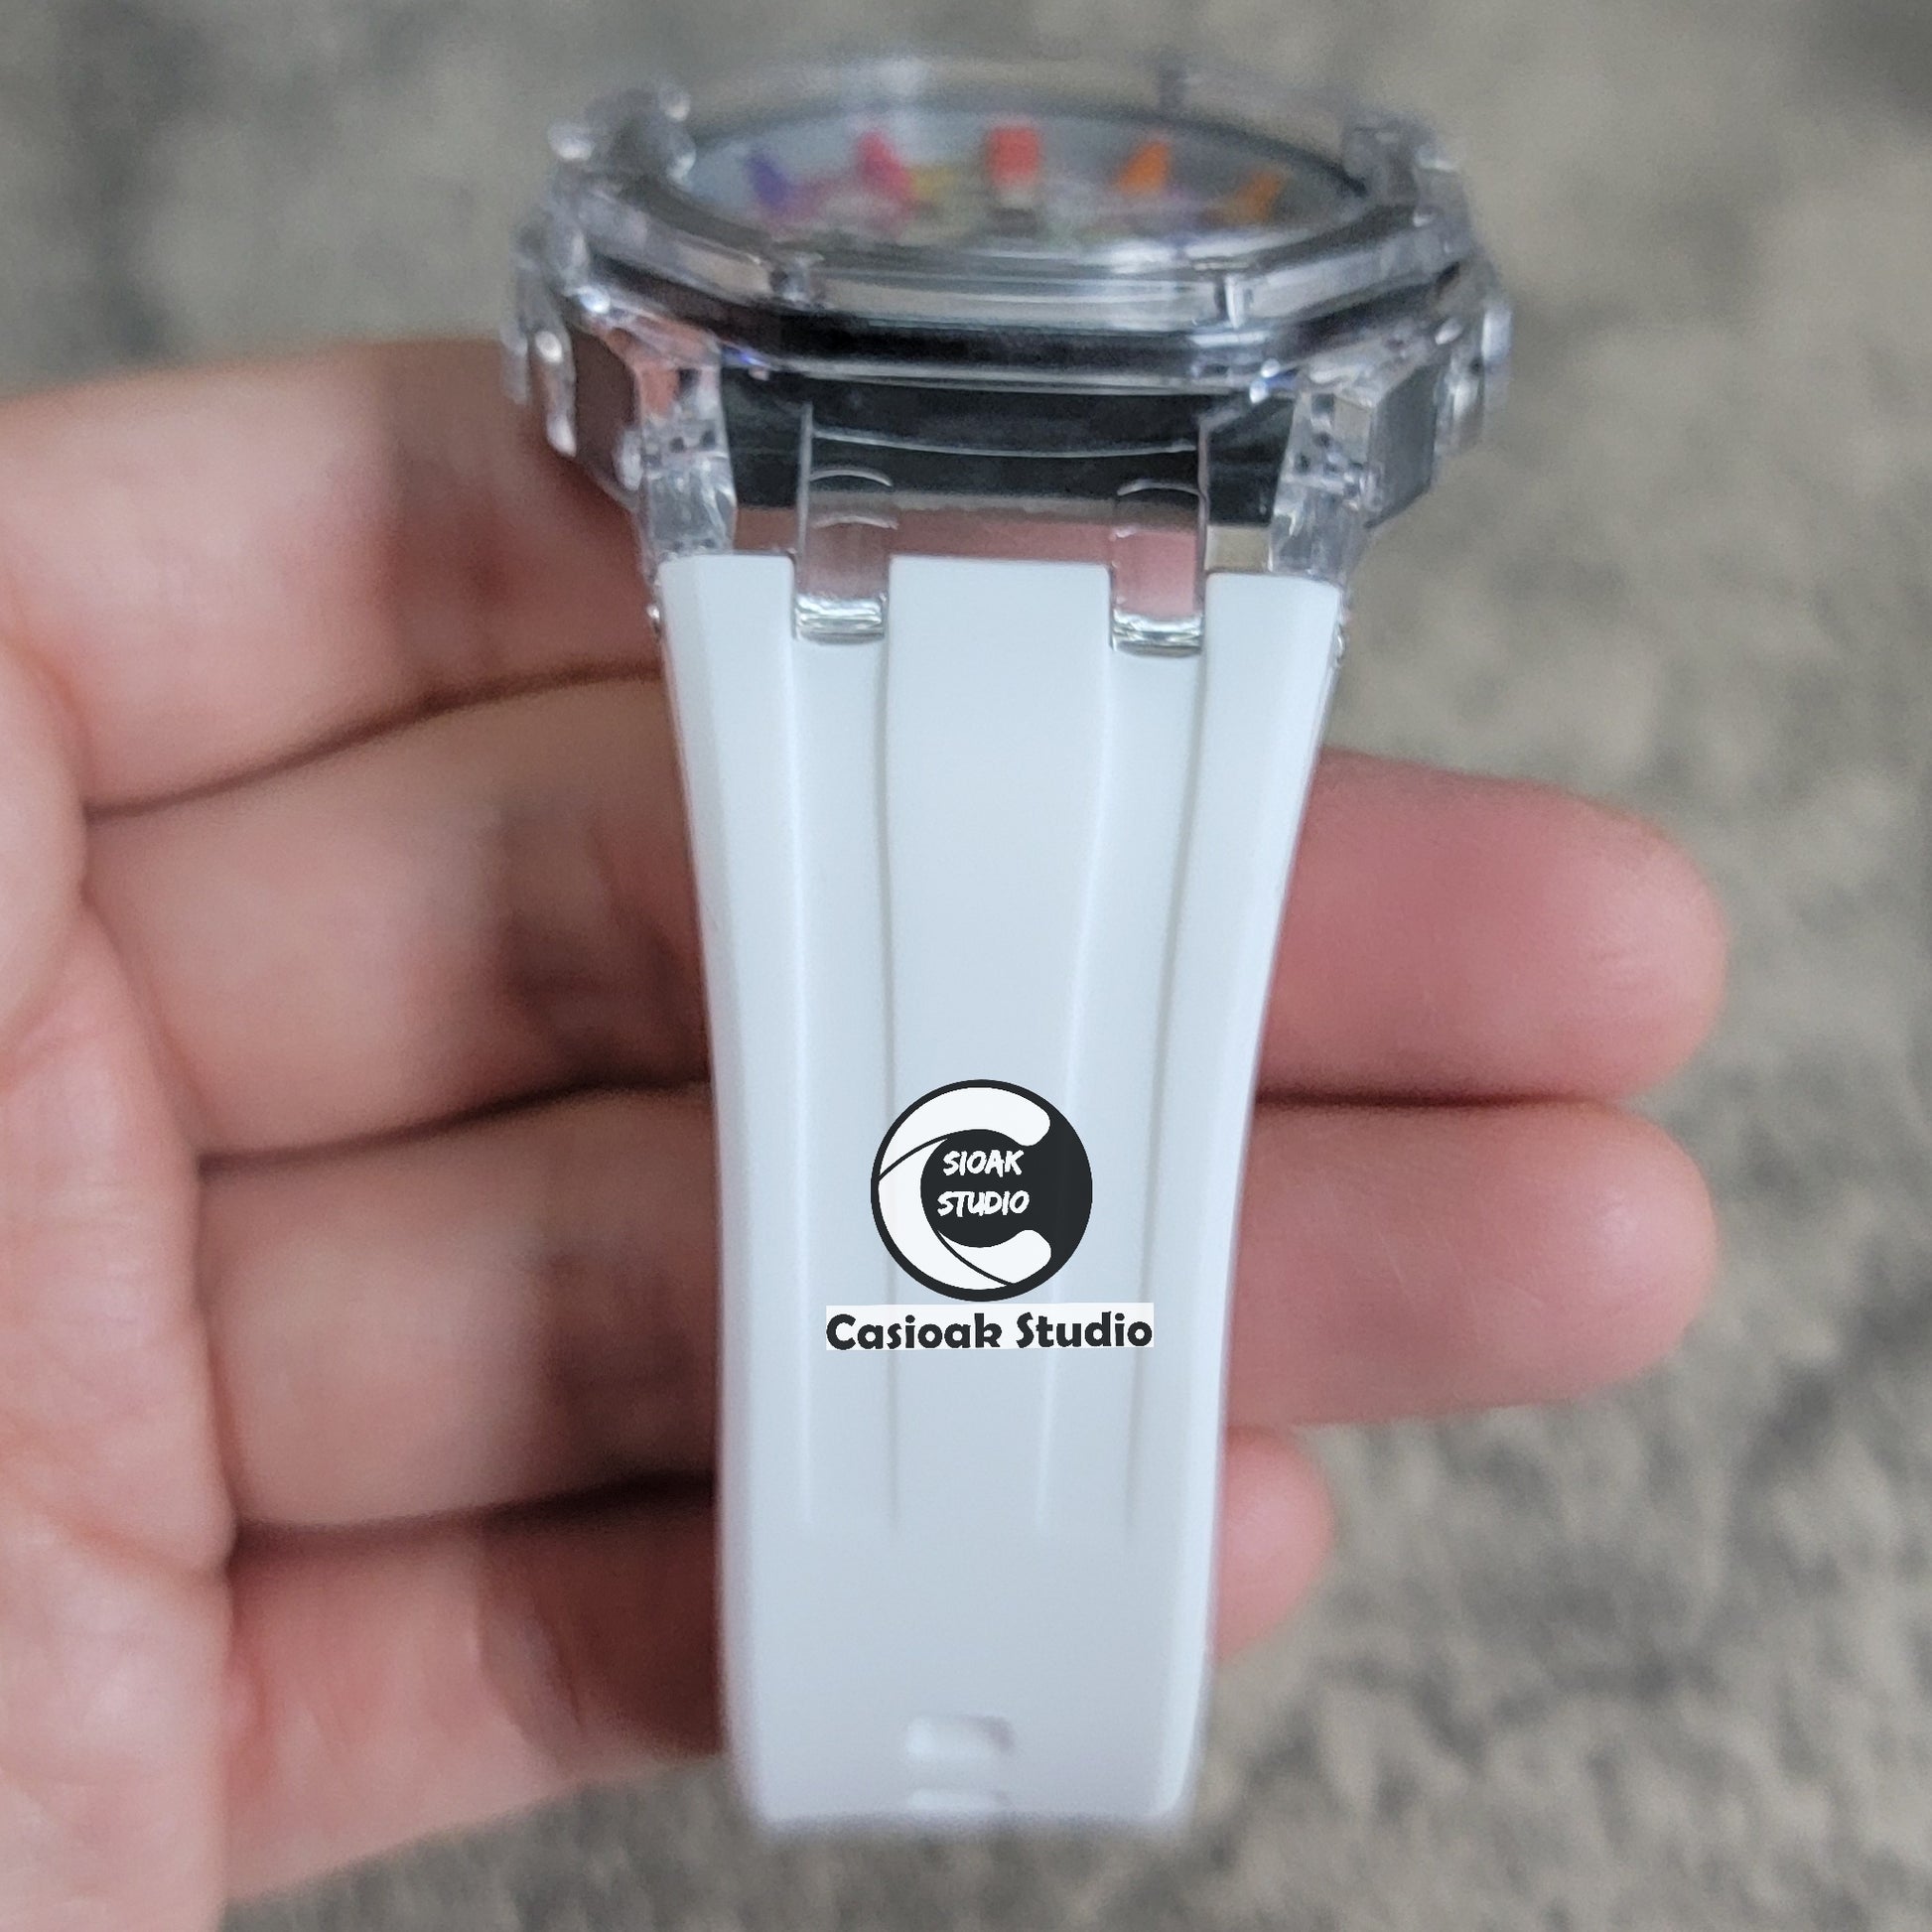 Casioak Mod Transparent Case White Strap Gray Rainbow Time Mark Takashi Murakami Dial 44mm - Casioak Studio